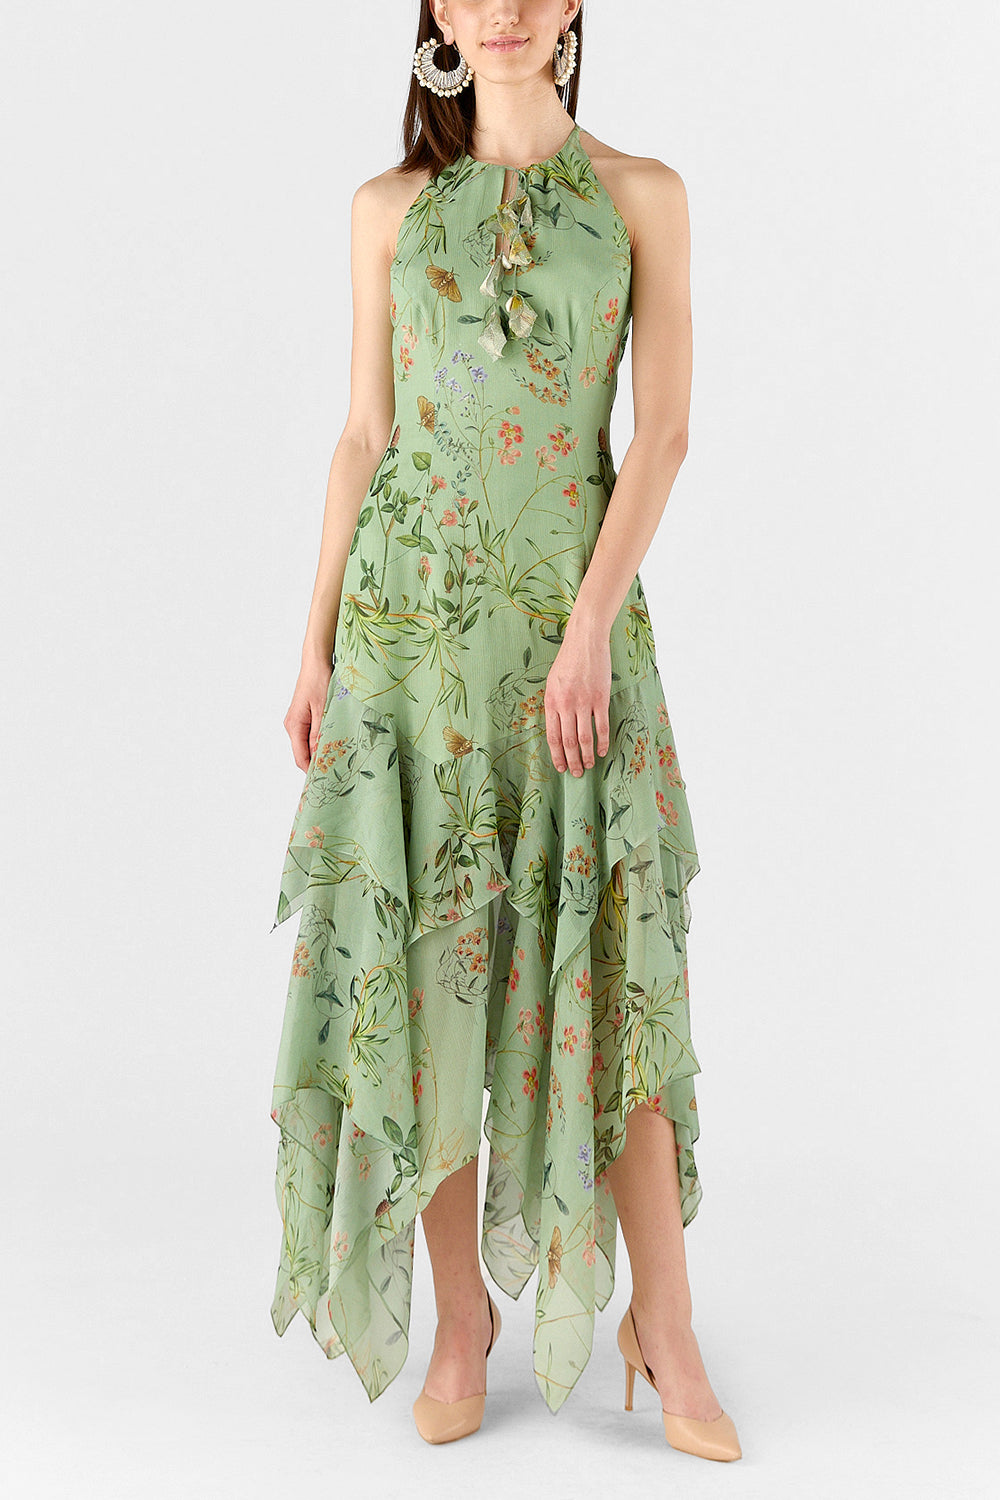 Sea Green Floral Printed Dress